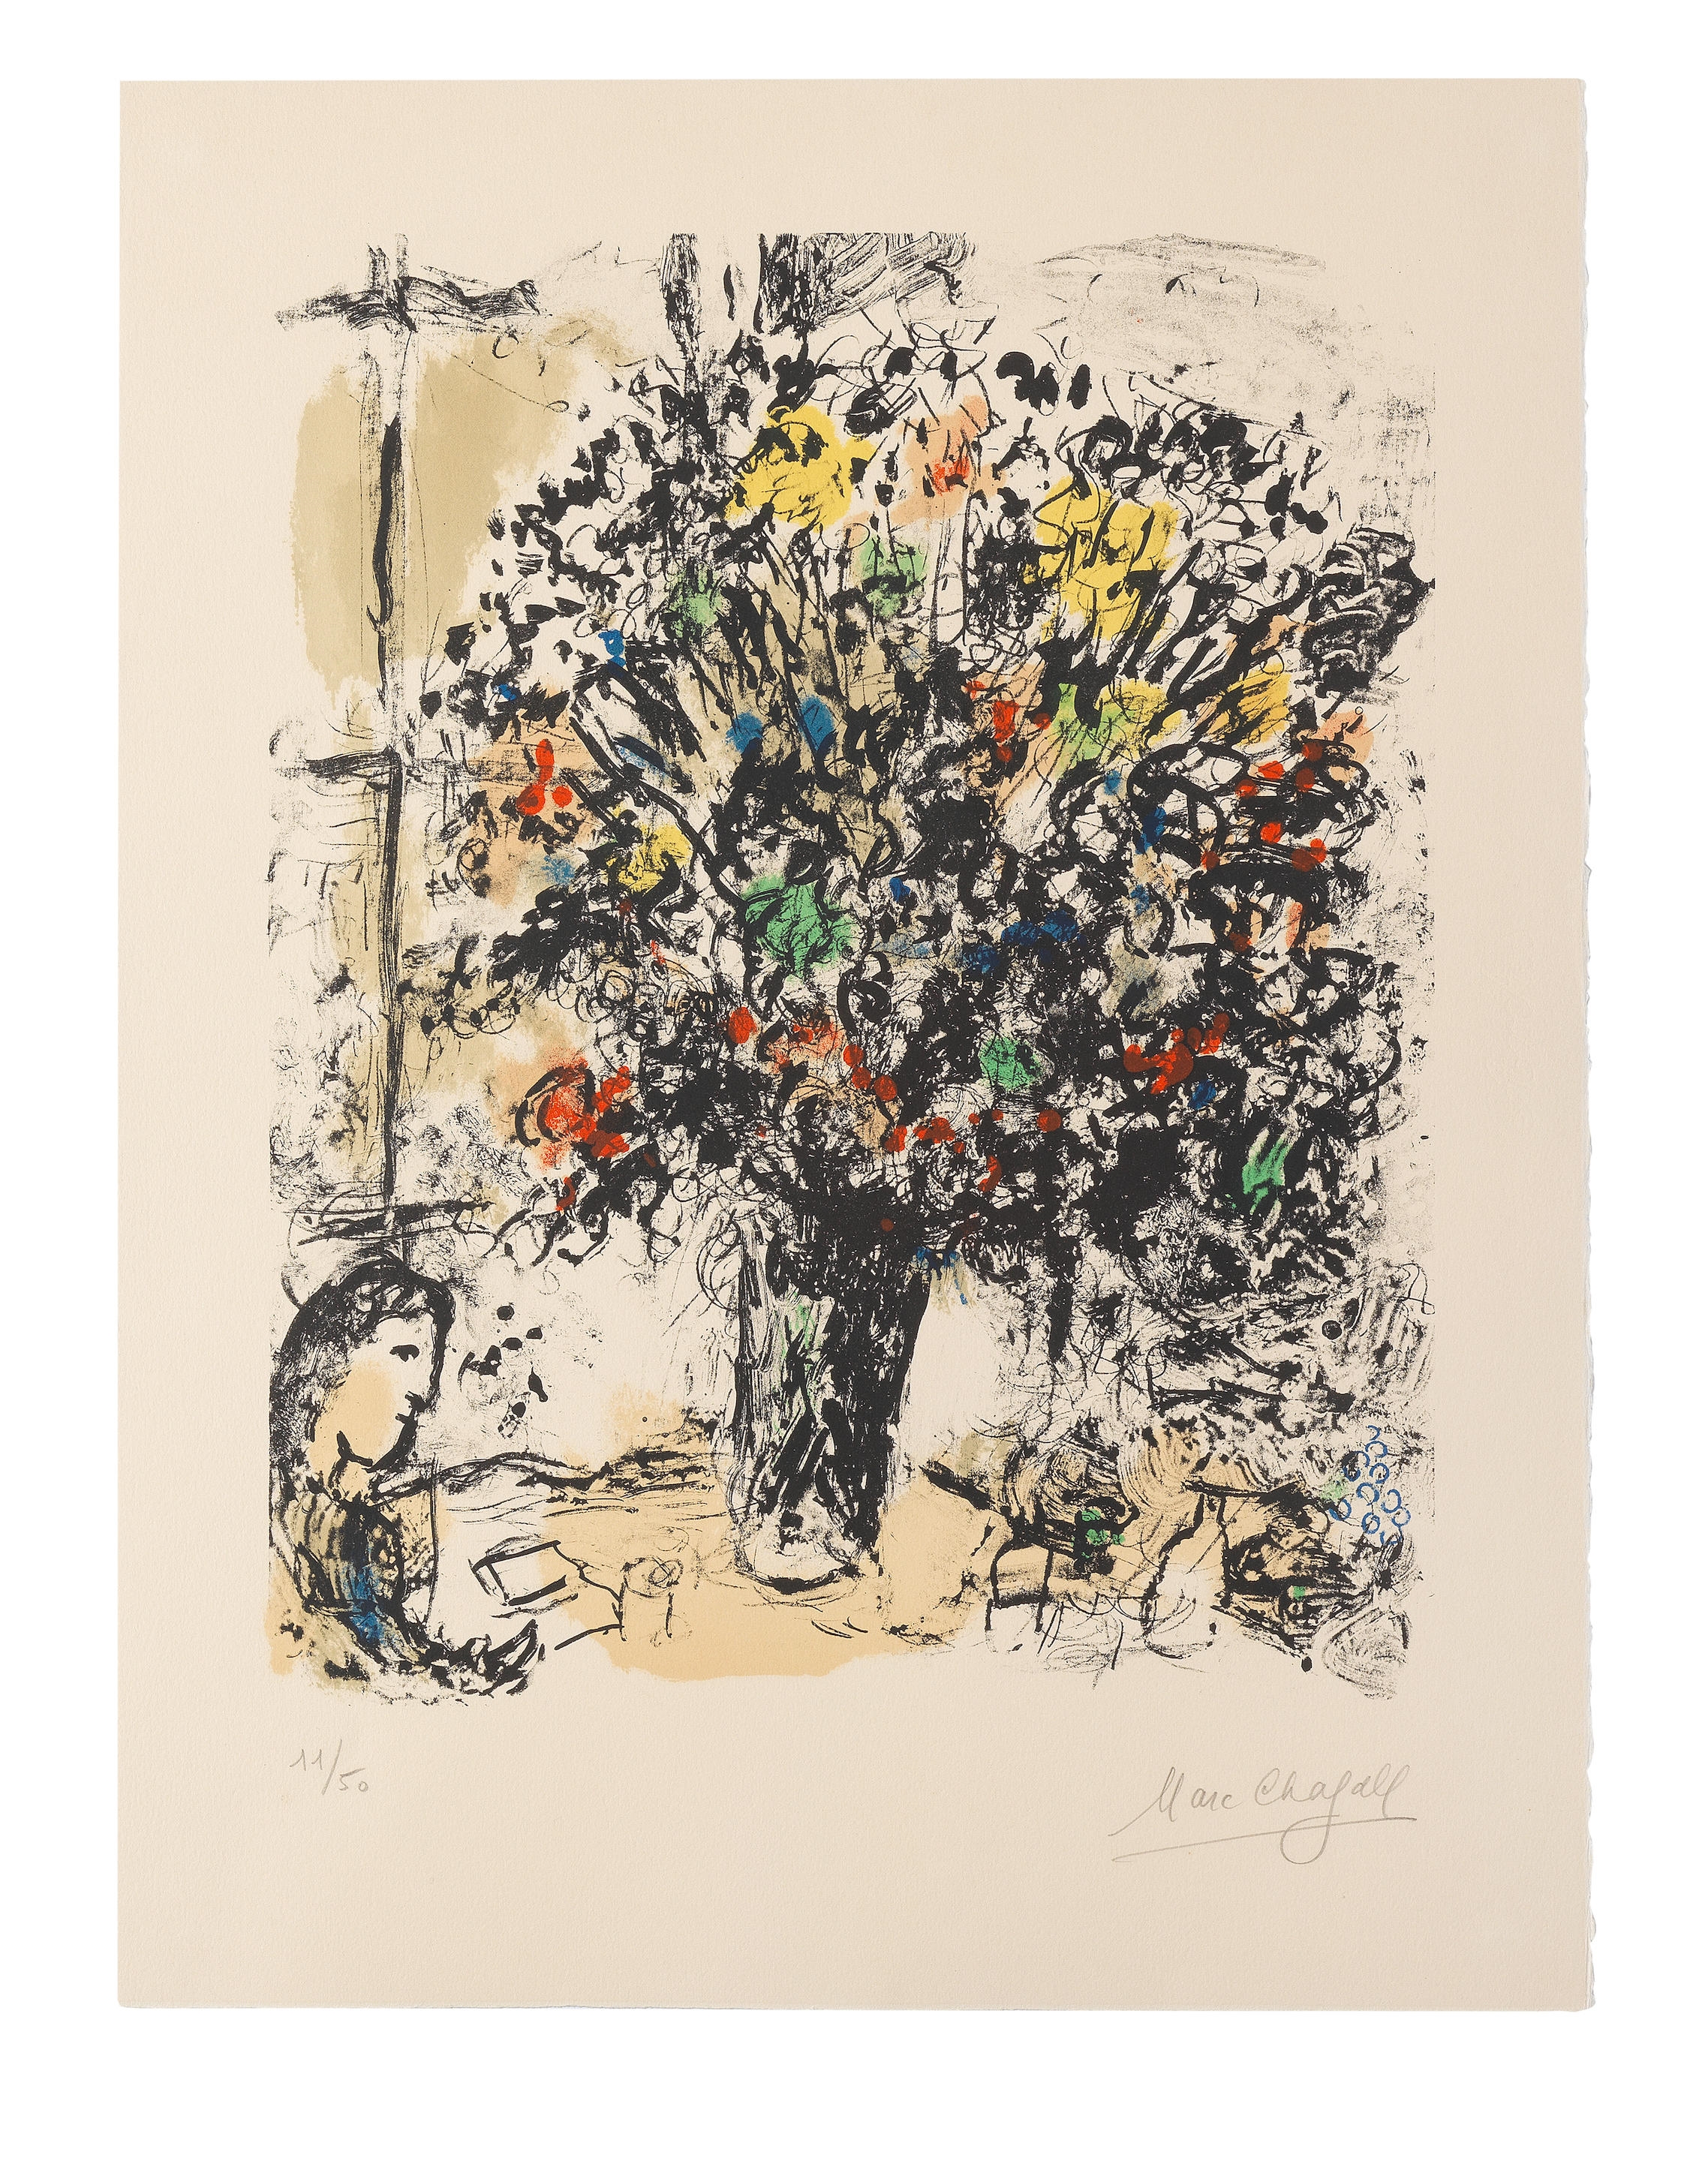 La Lecture (Mourlot 688) by Marc Chagall, 1973